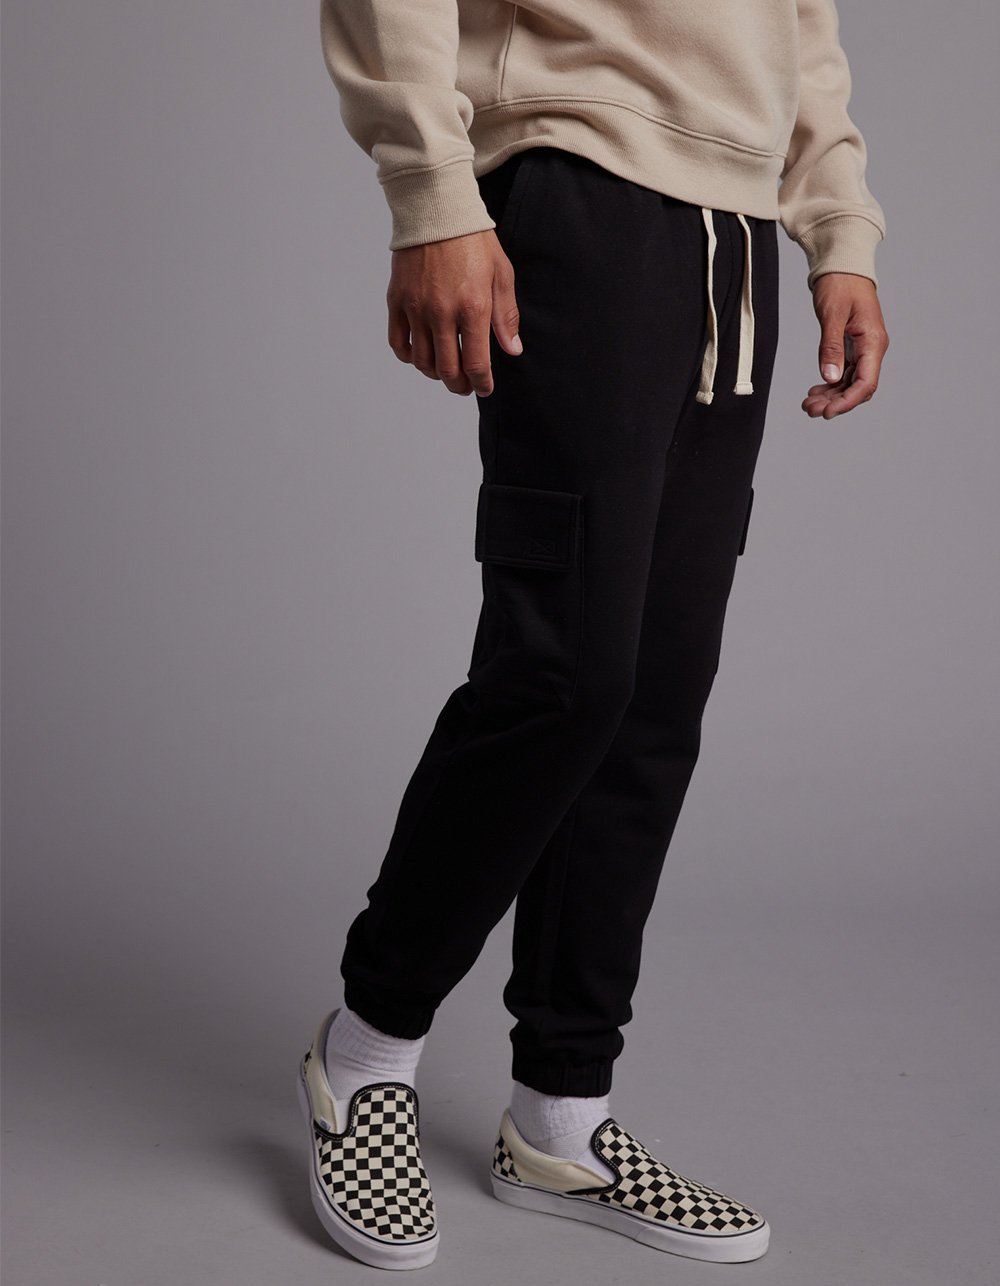 Maple Print Mens Drawstring Sweatpants Pocket Casual Comfy Jogger Pants  Mens Clothing, High-quality & Affordable